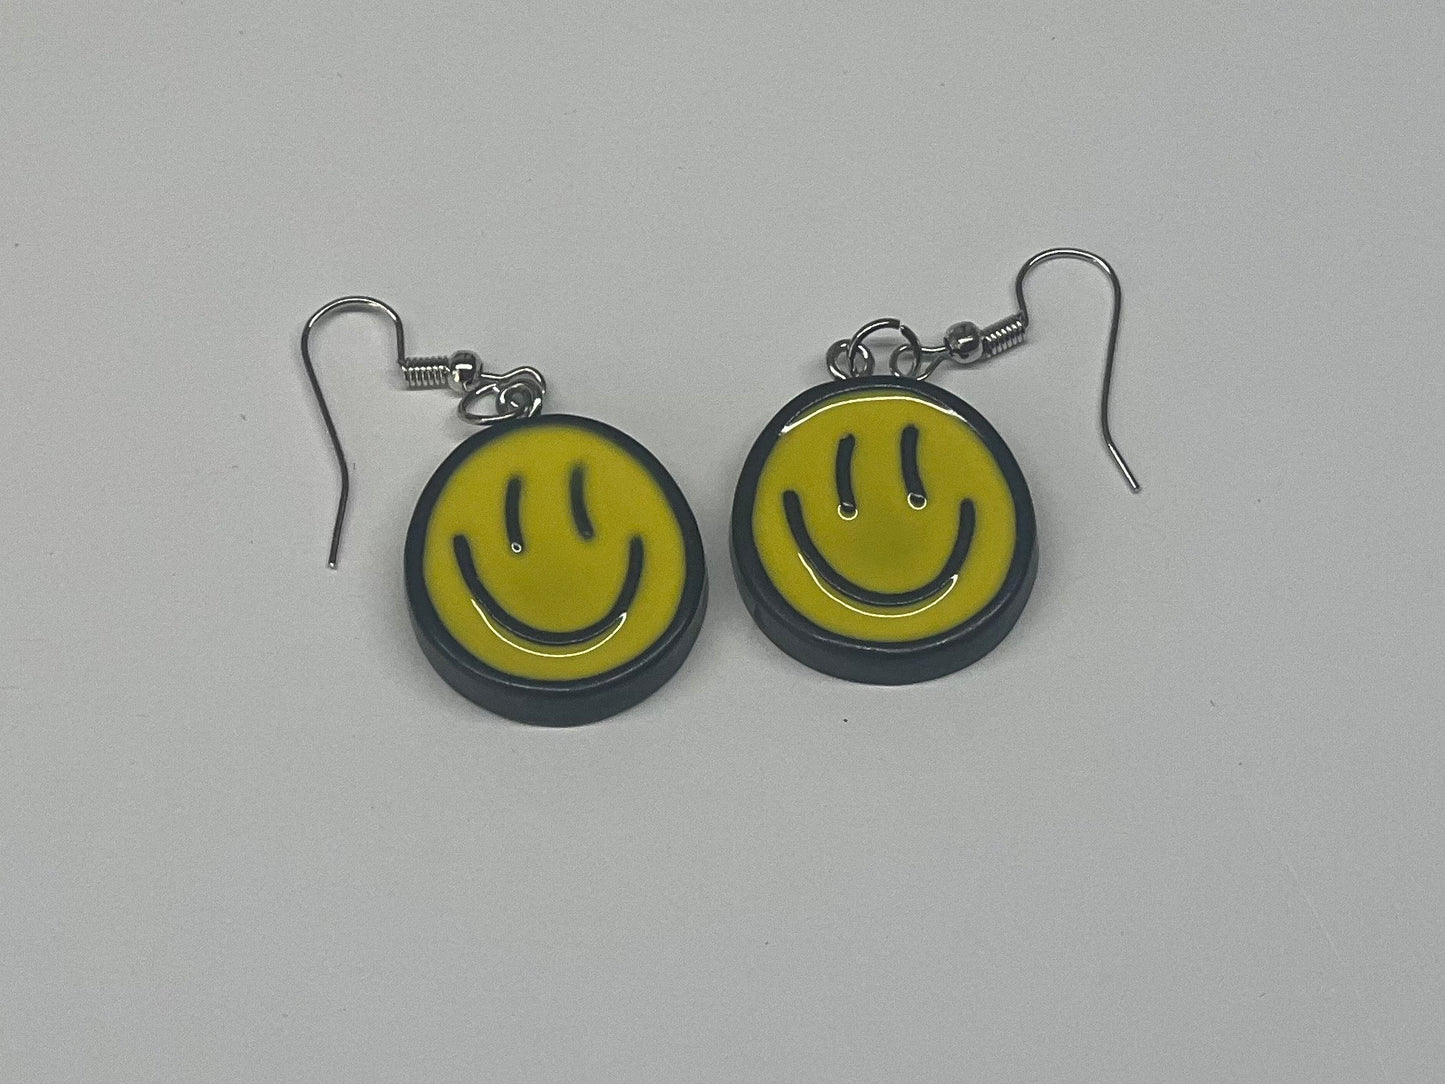 Smiley Face Earrings